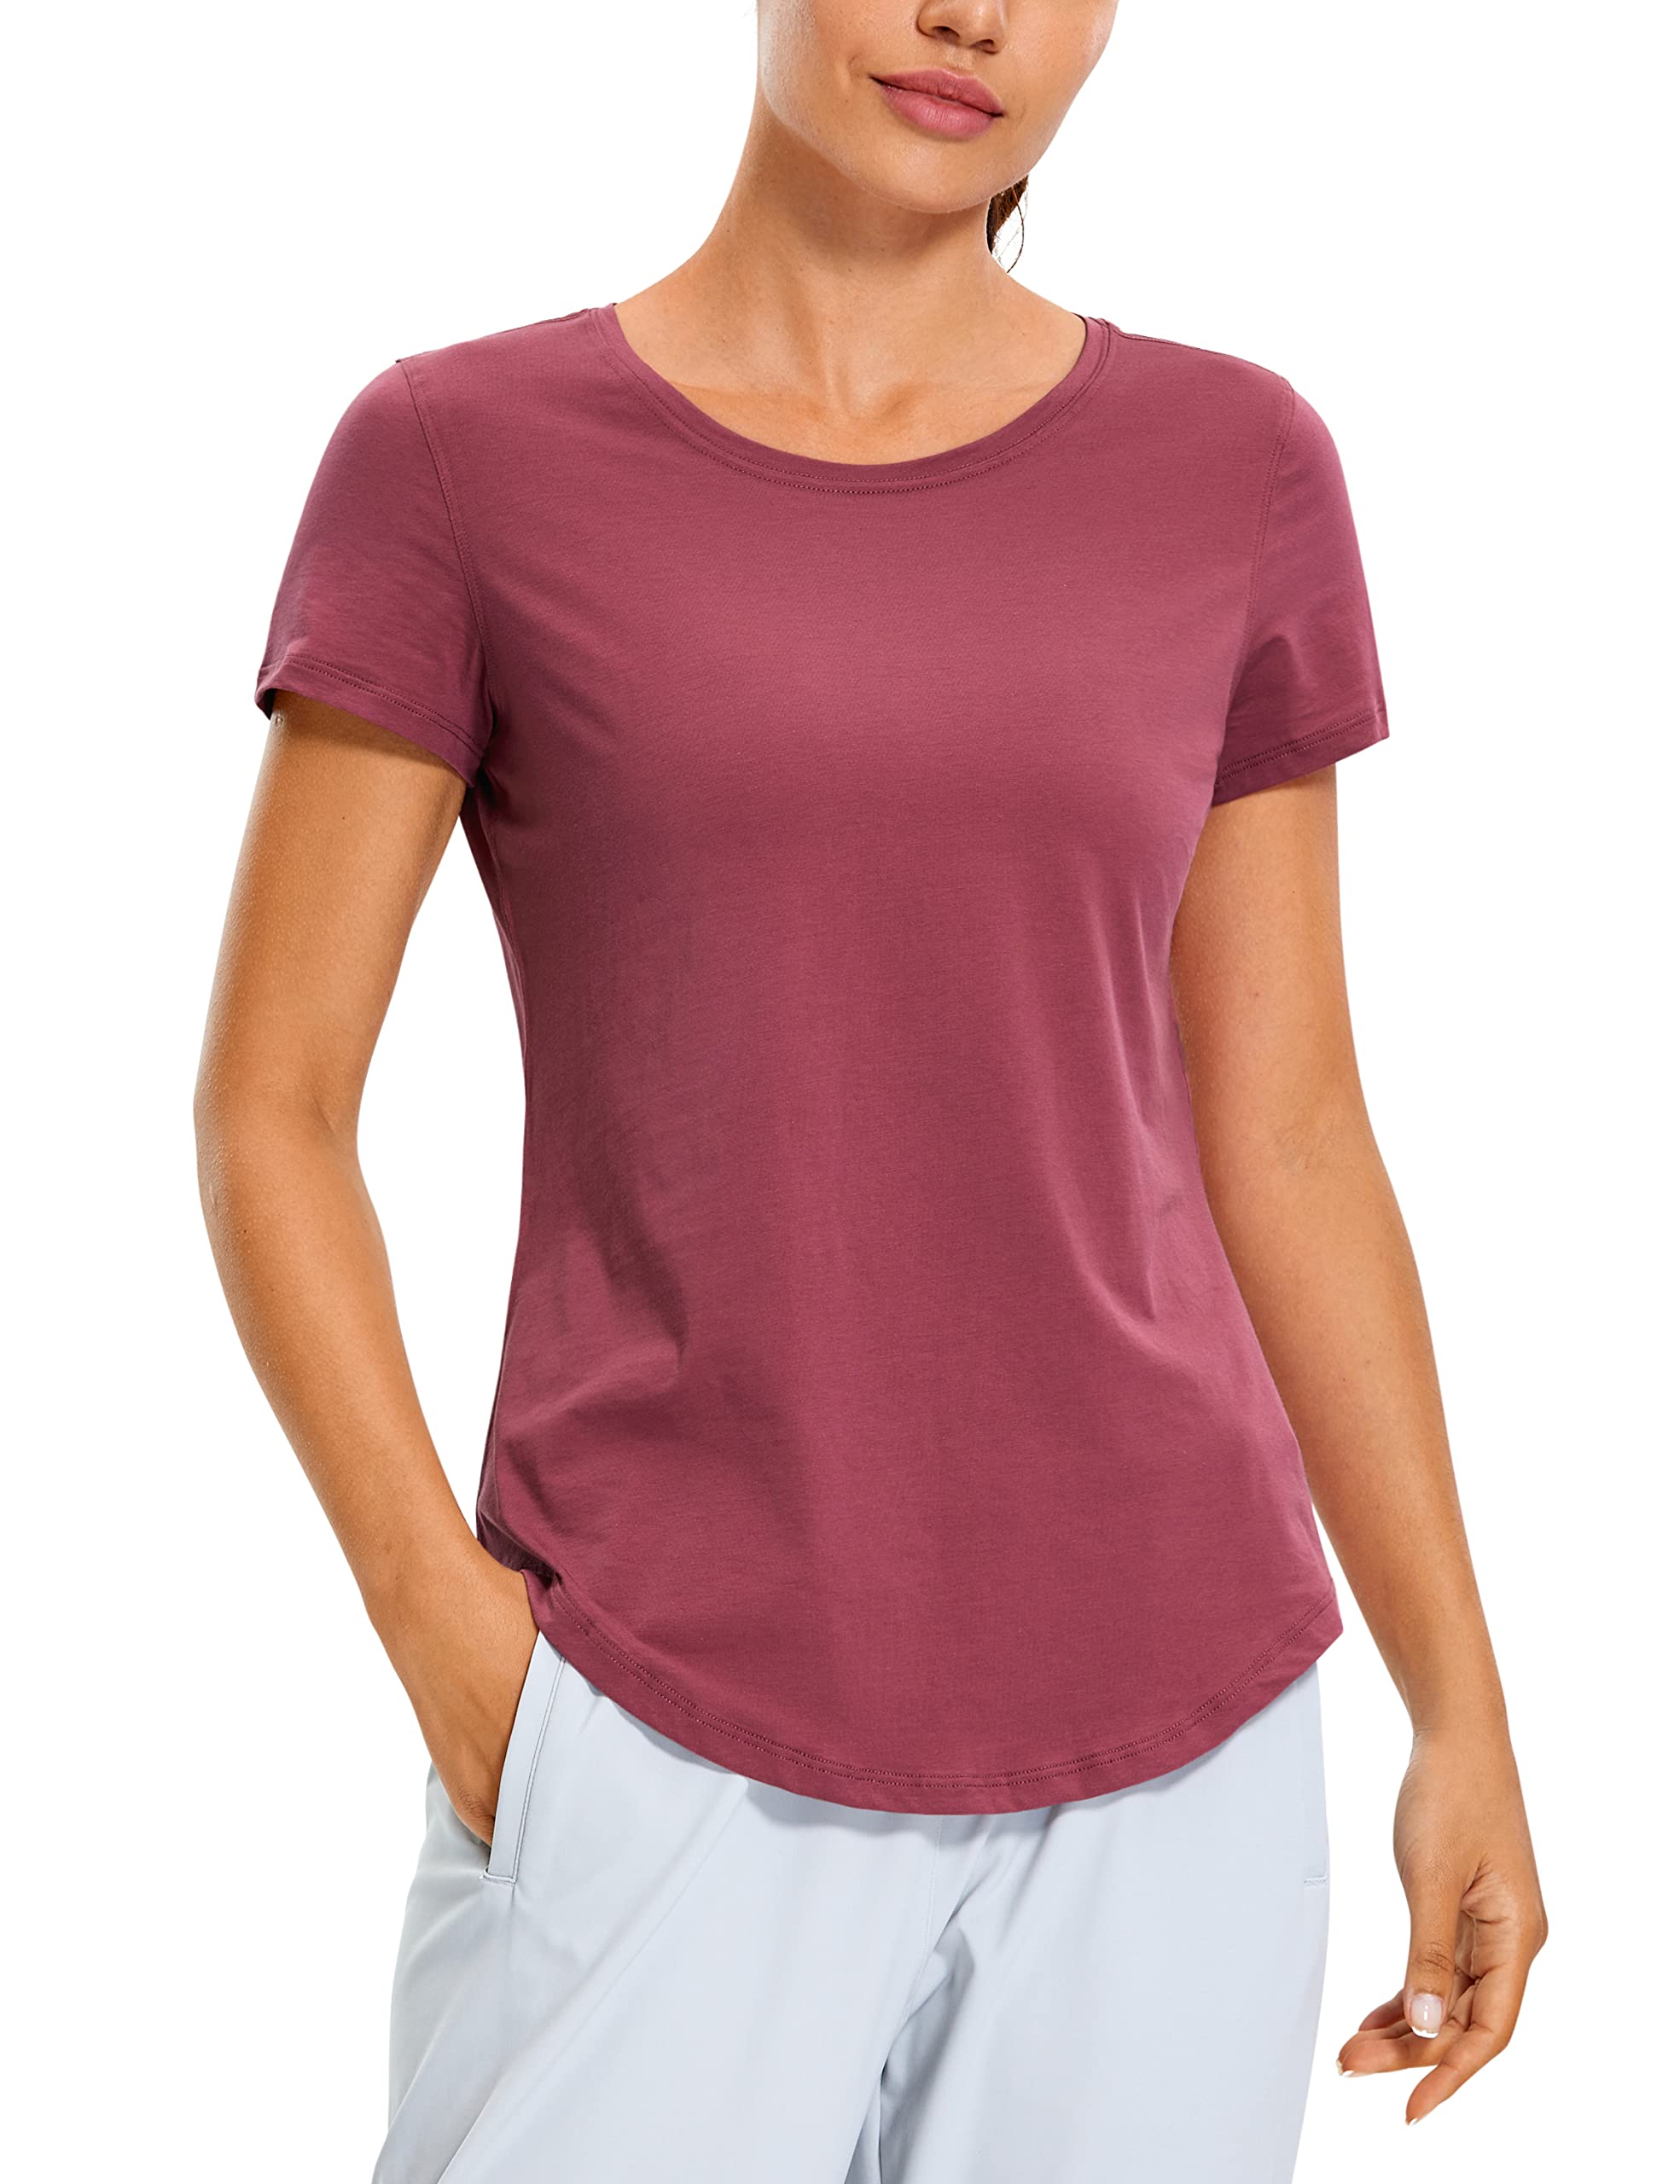  Womens Pima Cotton Workout Crop Tops Short Sleeve Yoga  Shirts Casual Athletic Running T-Shirts Bright Verdancy Medium